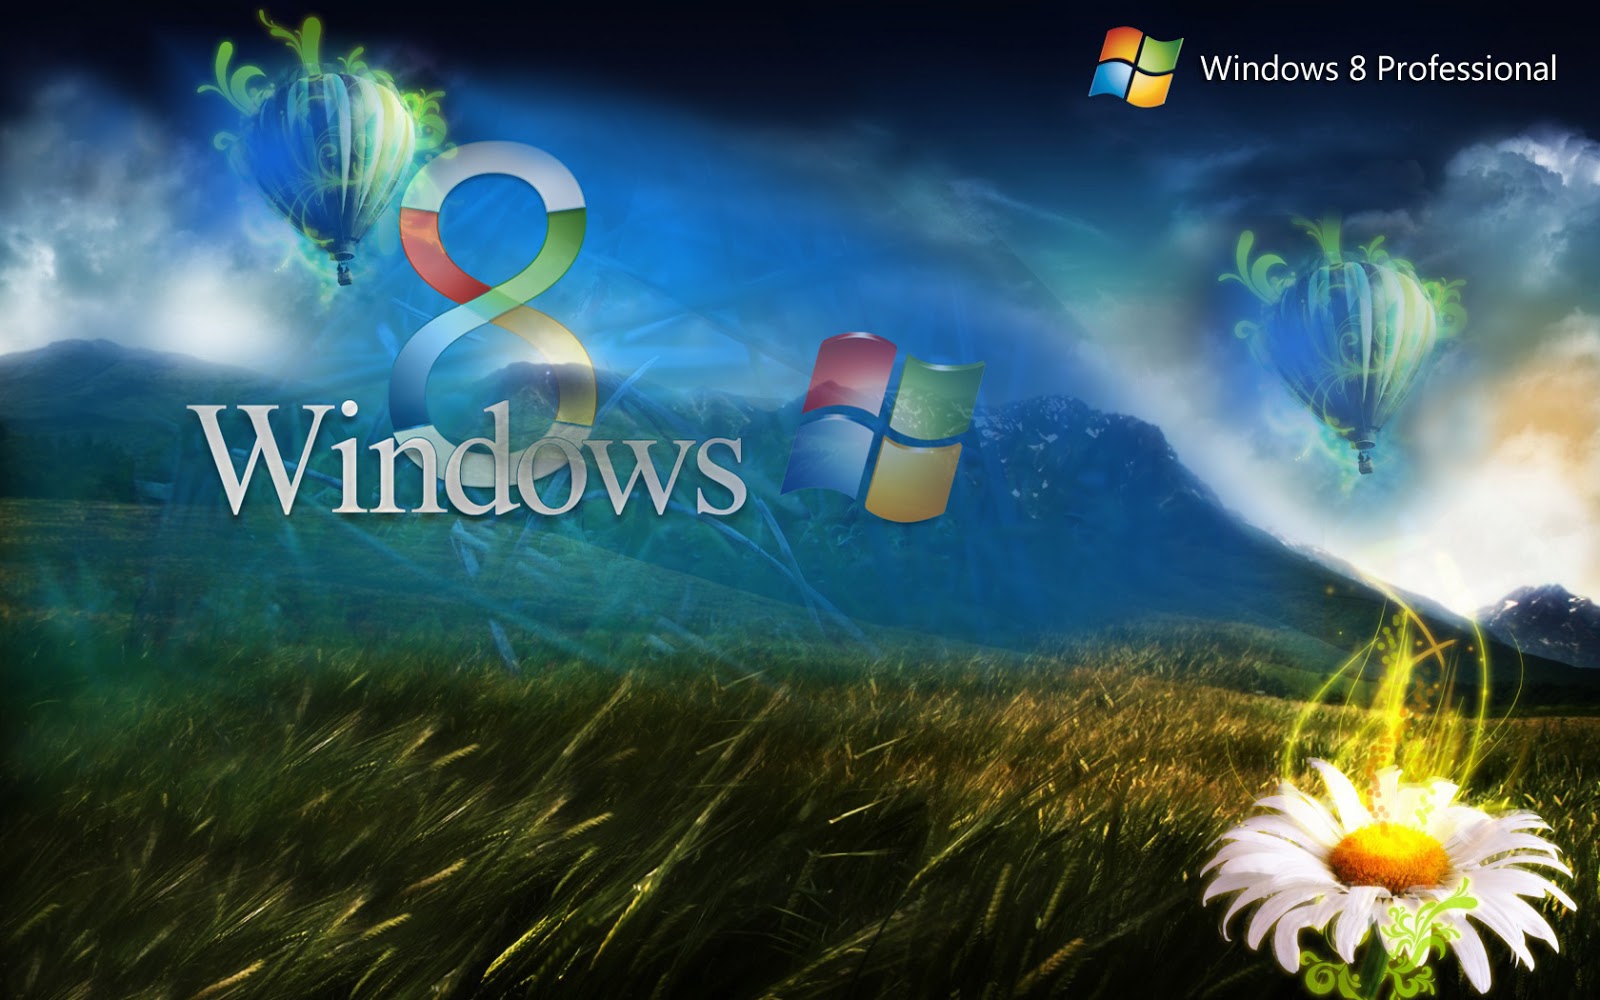 Microsoft Windows 7 Home Premium Upgrade Family Pack (3-User)